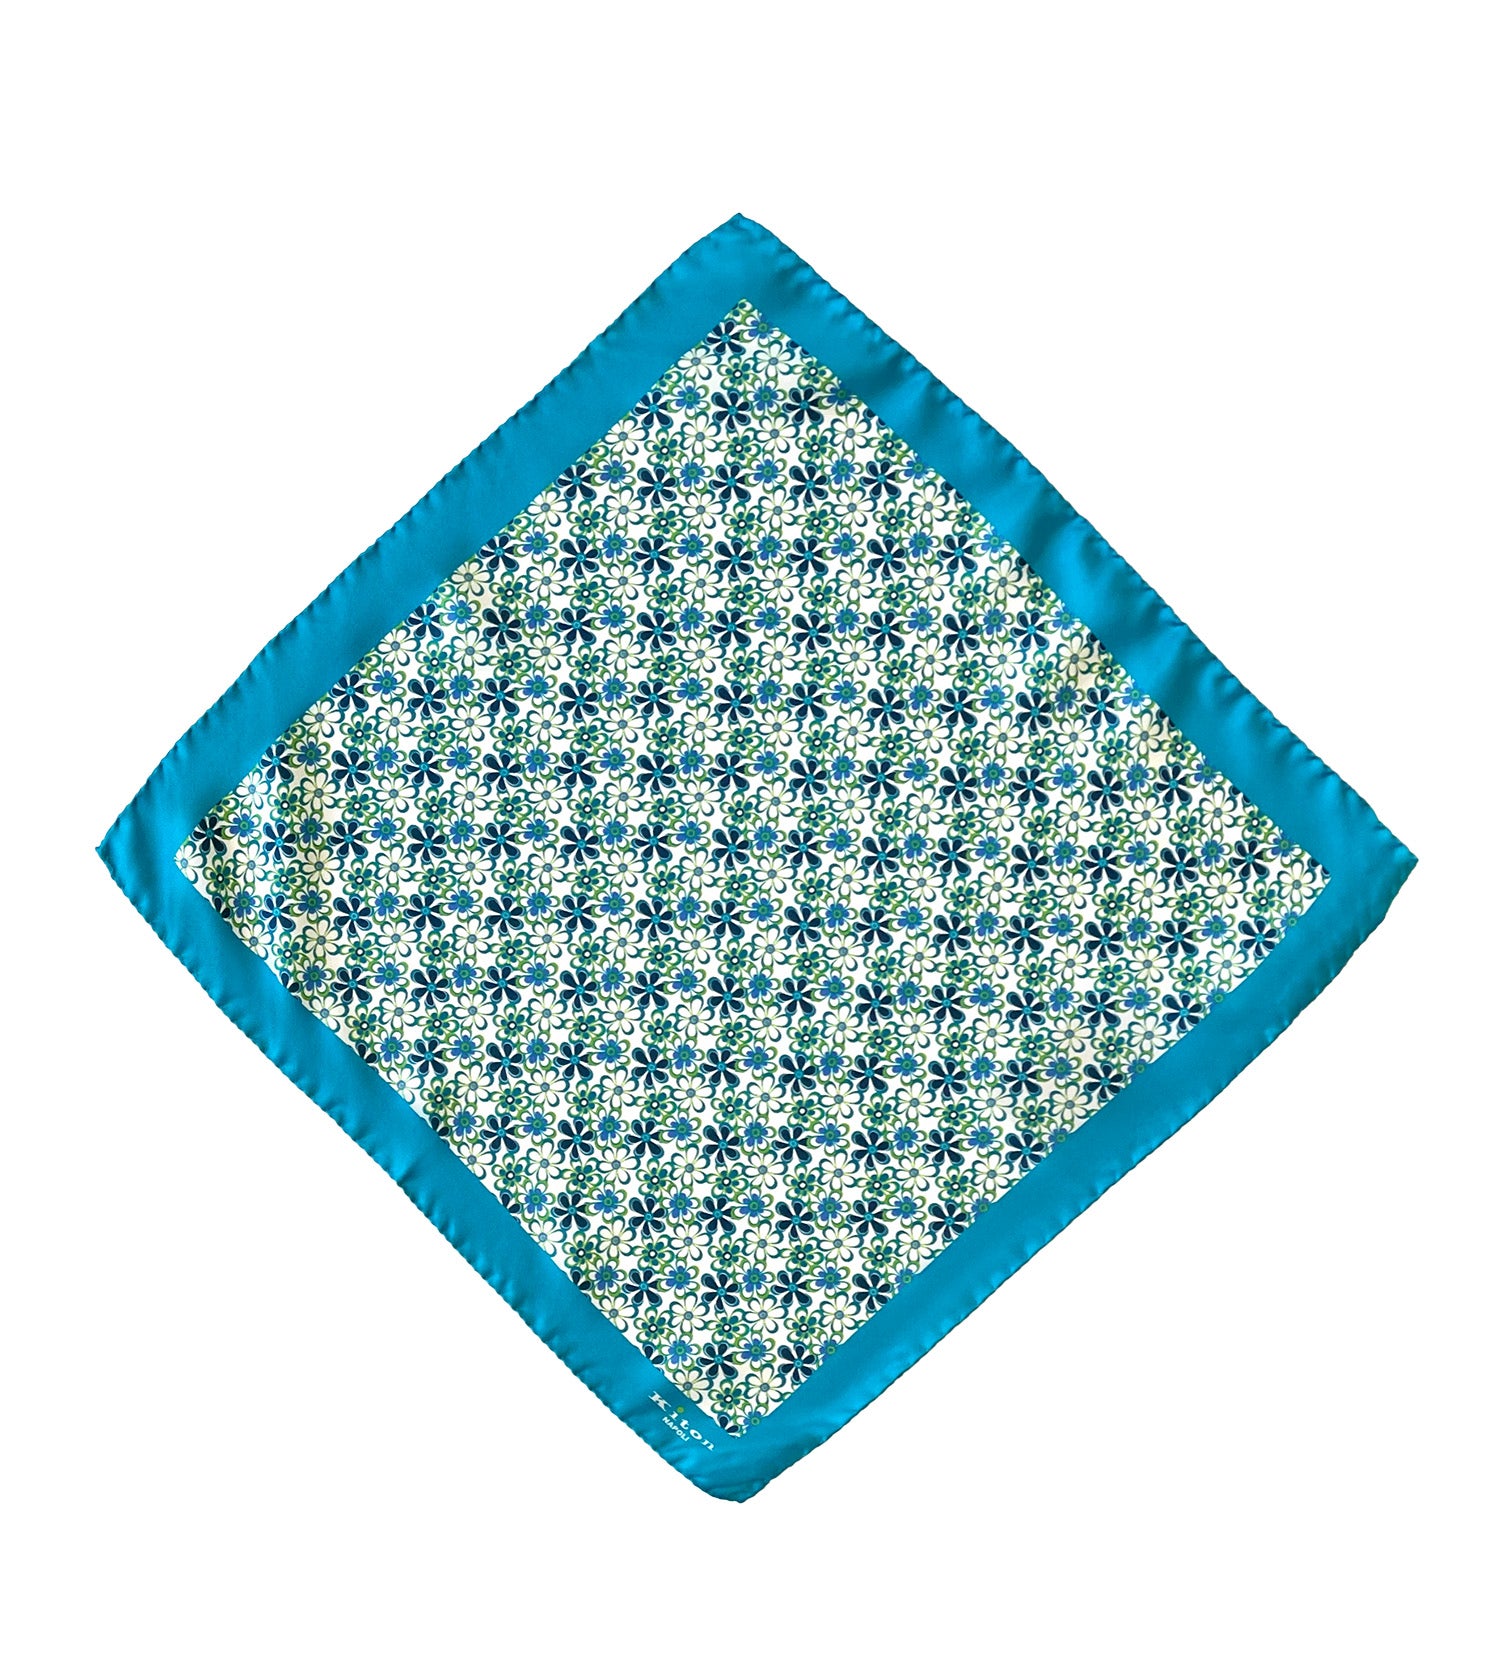 KITON Teal Border with Modern Floral Pattern Silk Pocket Square.